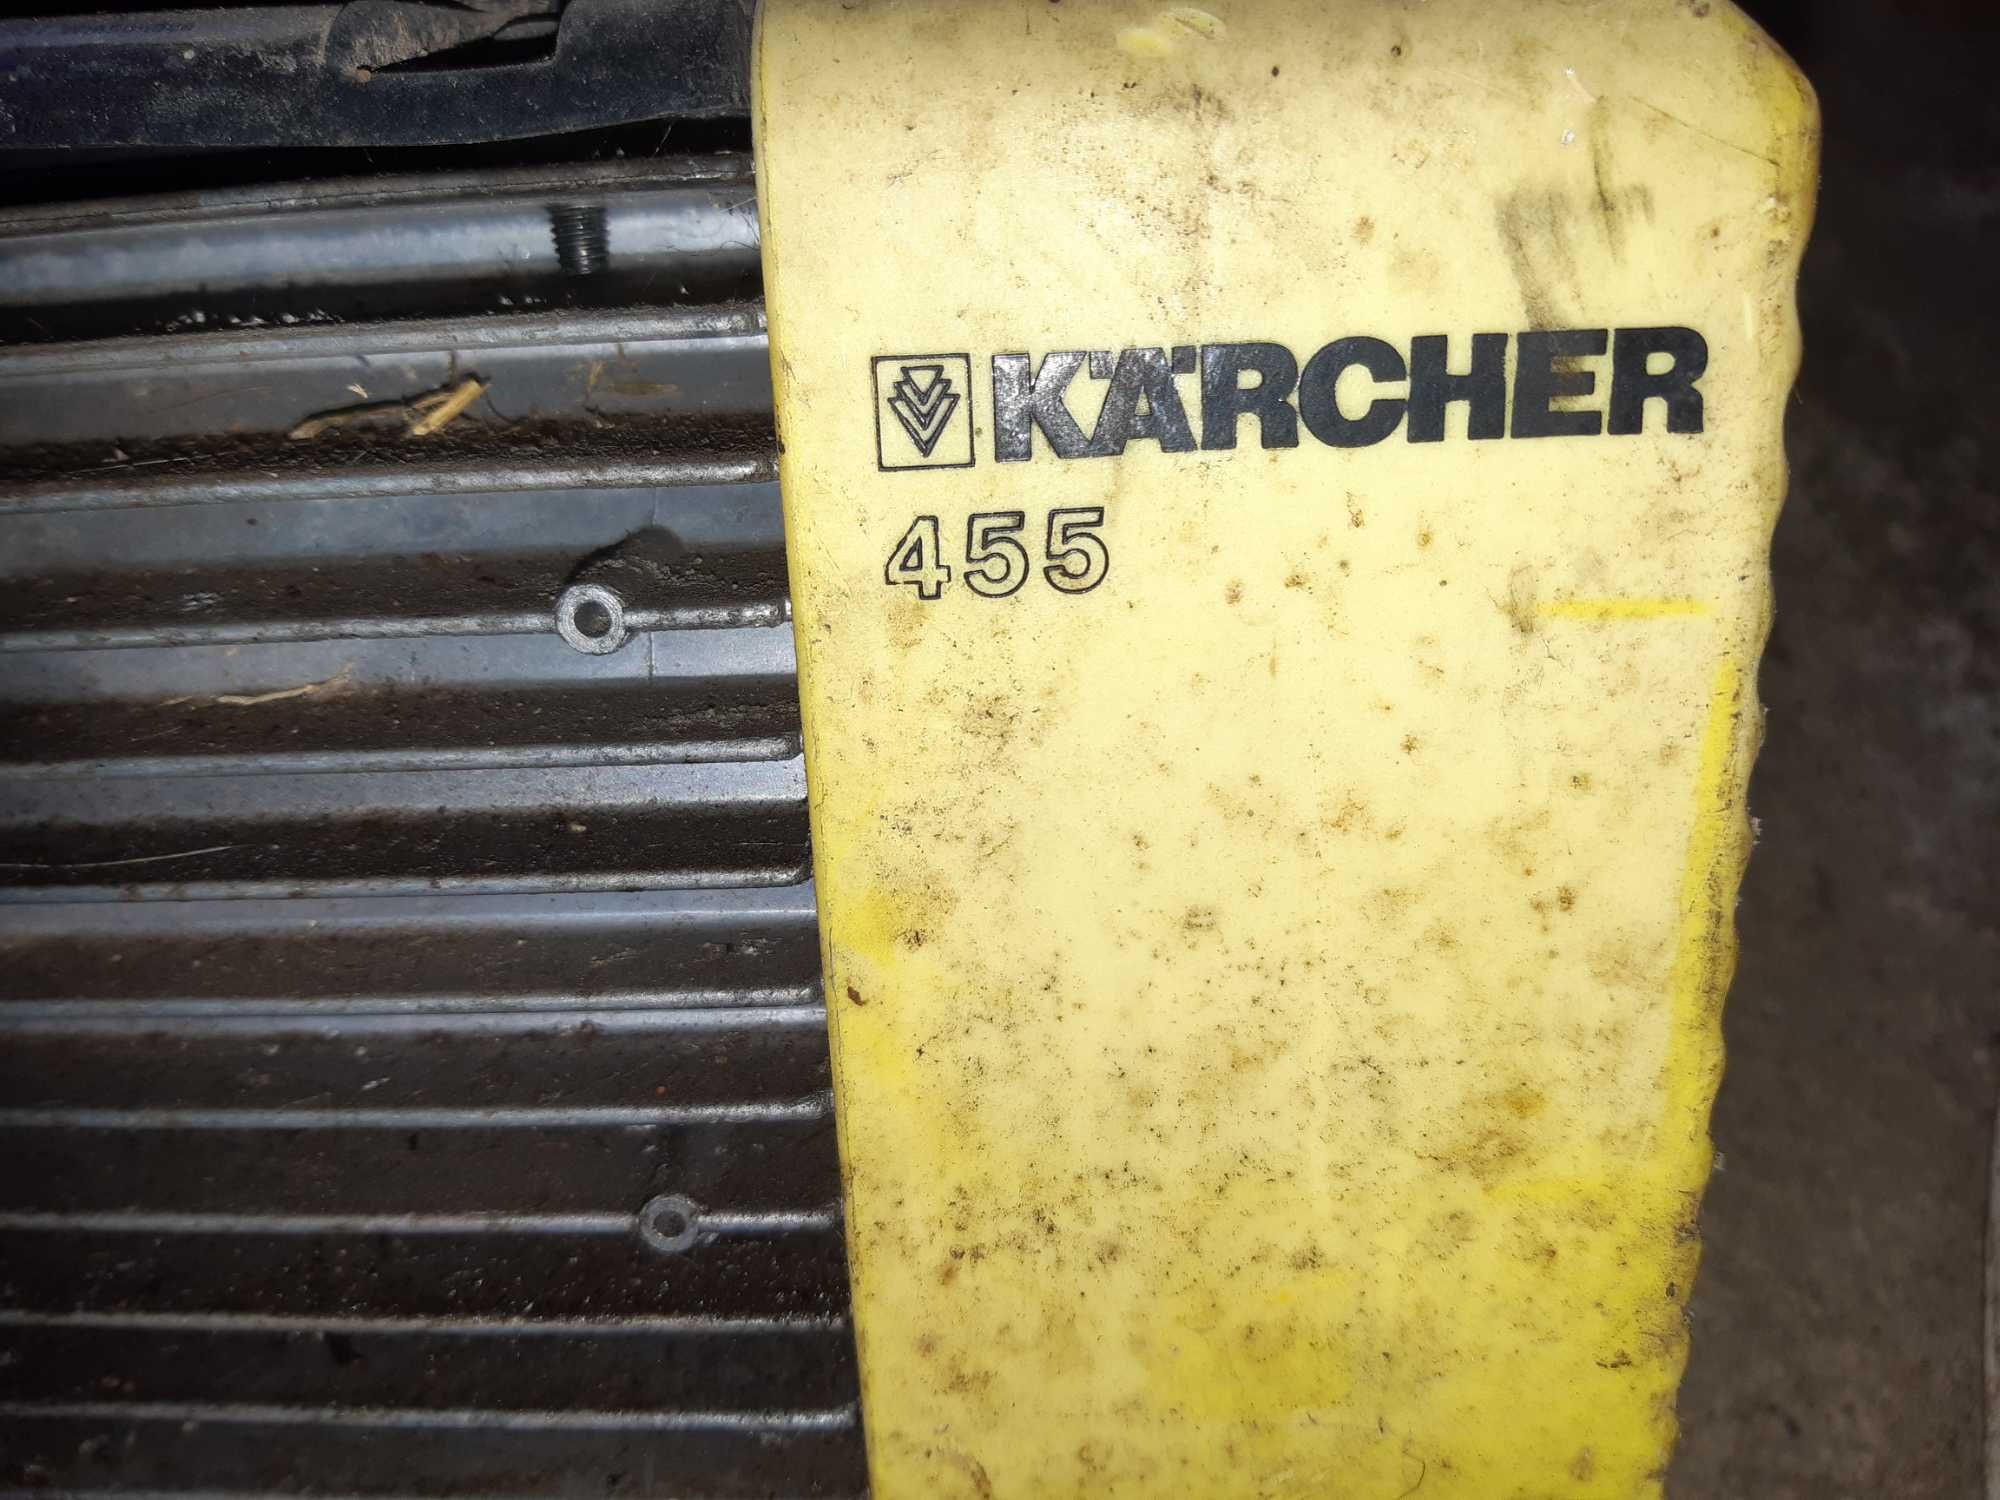 Karcher 455 dawca częsci